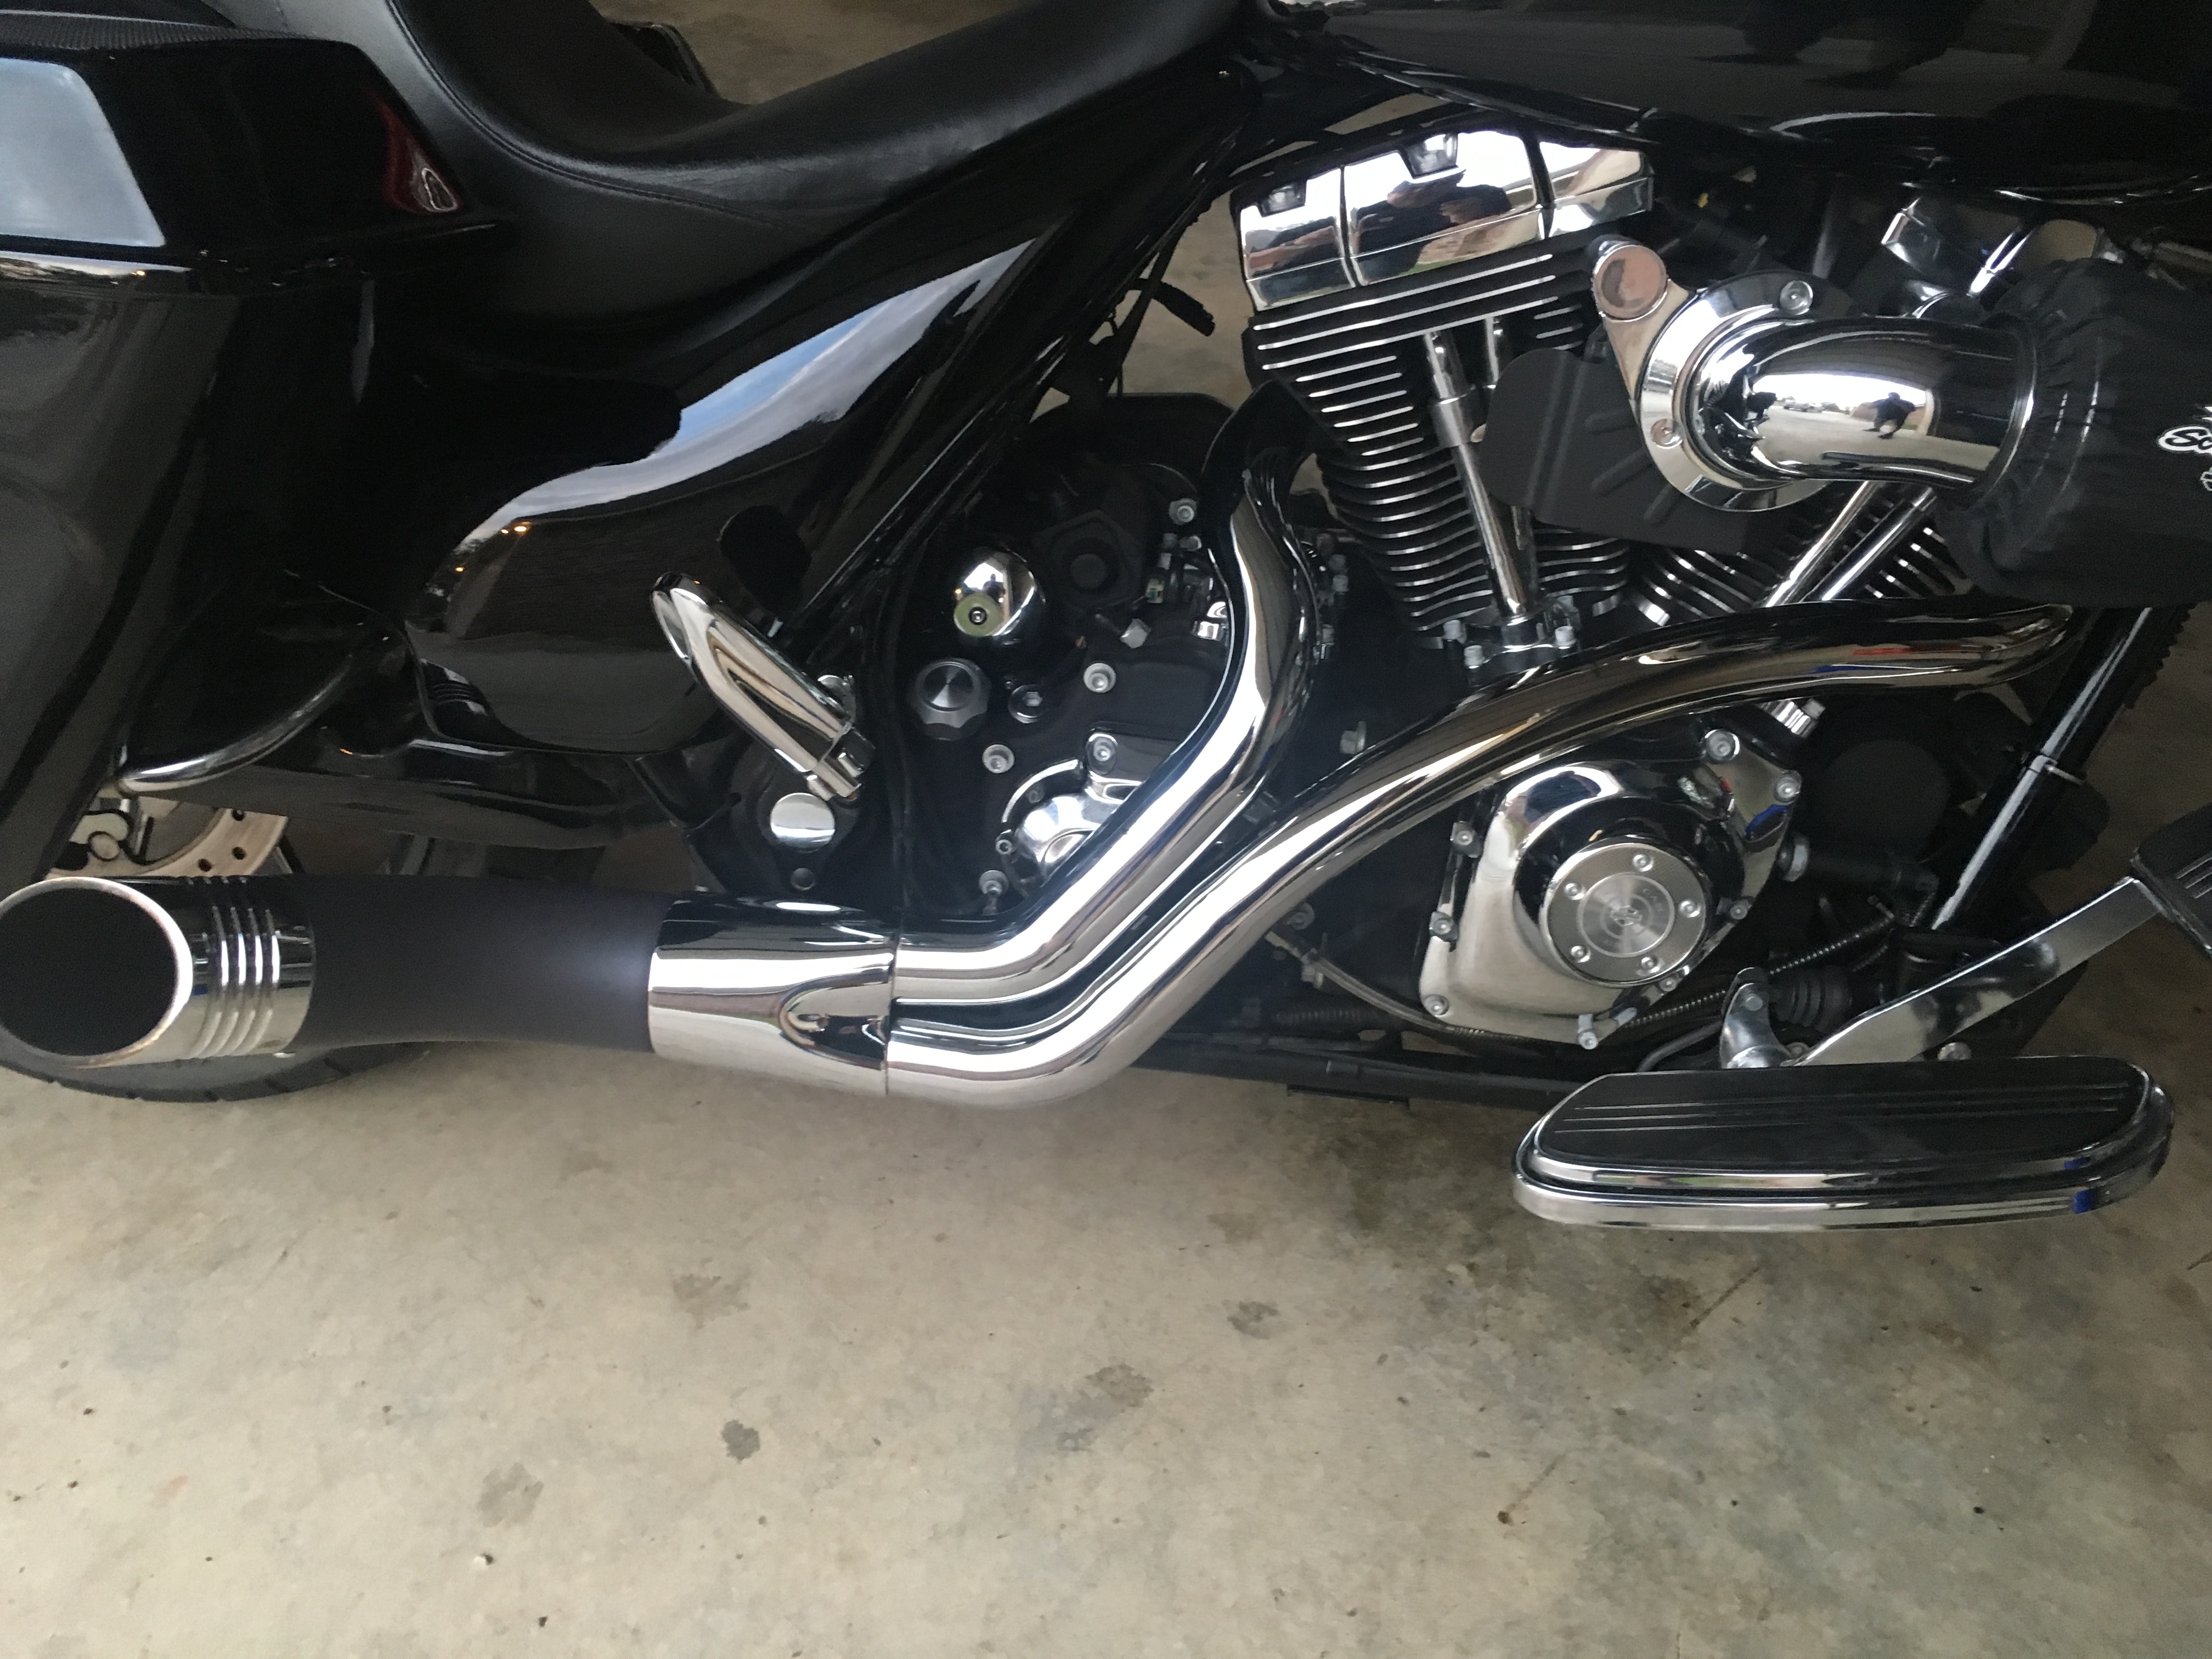 Dirty bird 2 into 1 exhaust - Harley Davidson Forums